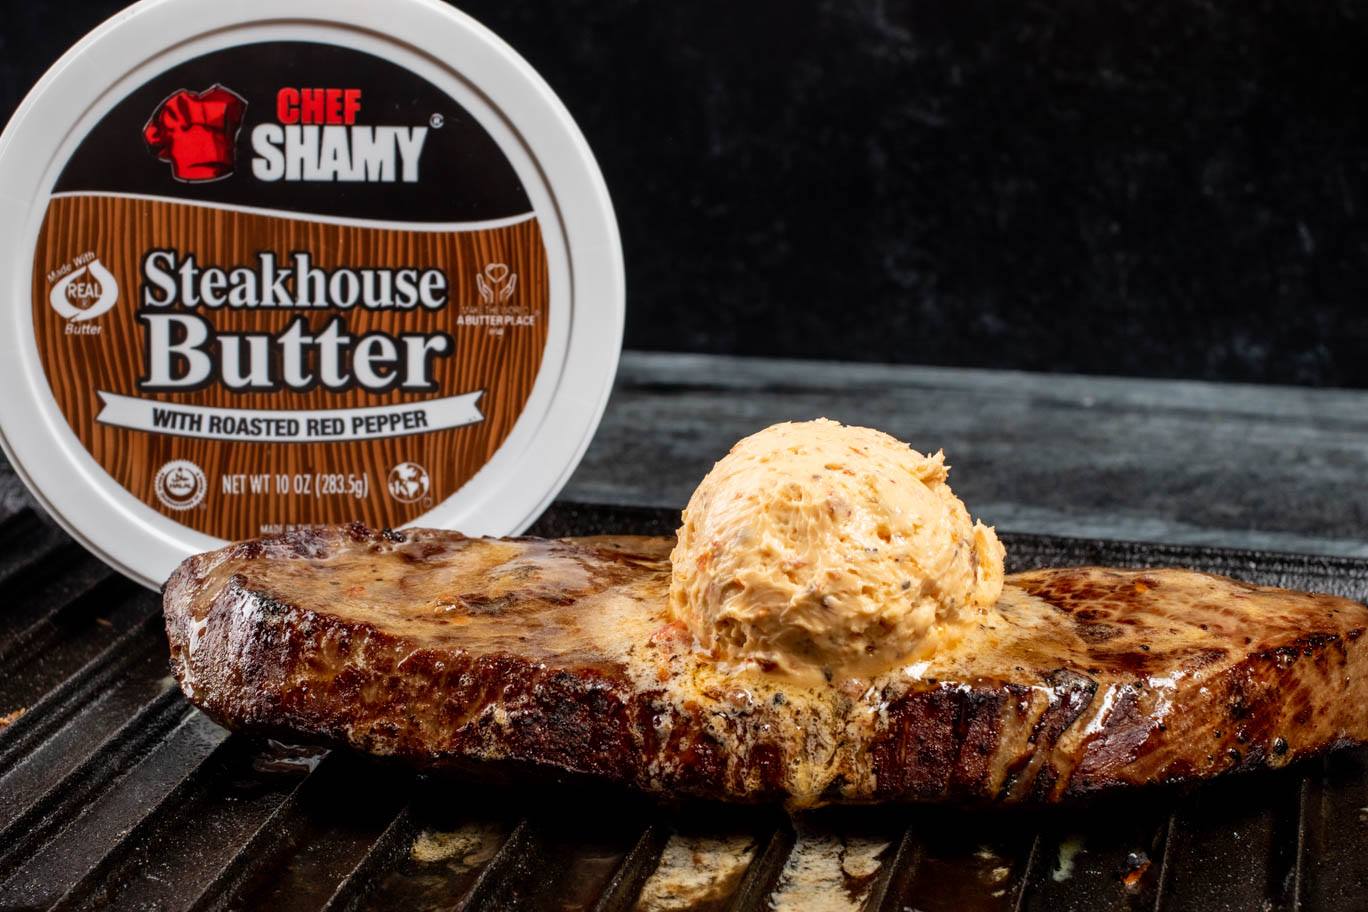 Chef Shamy Steakhouse Butter Seared Steak